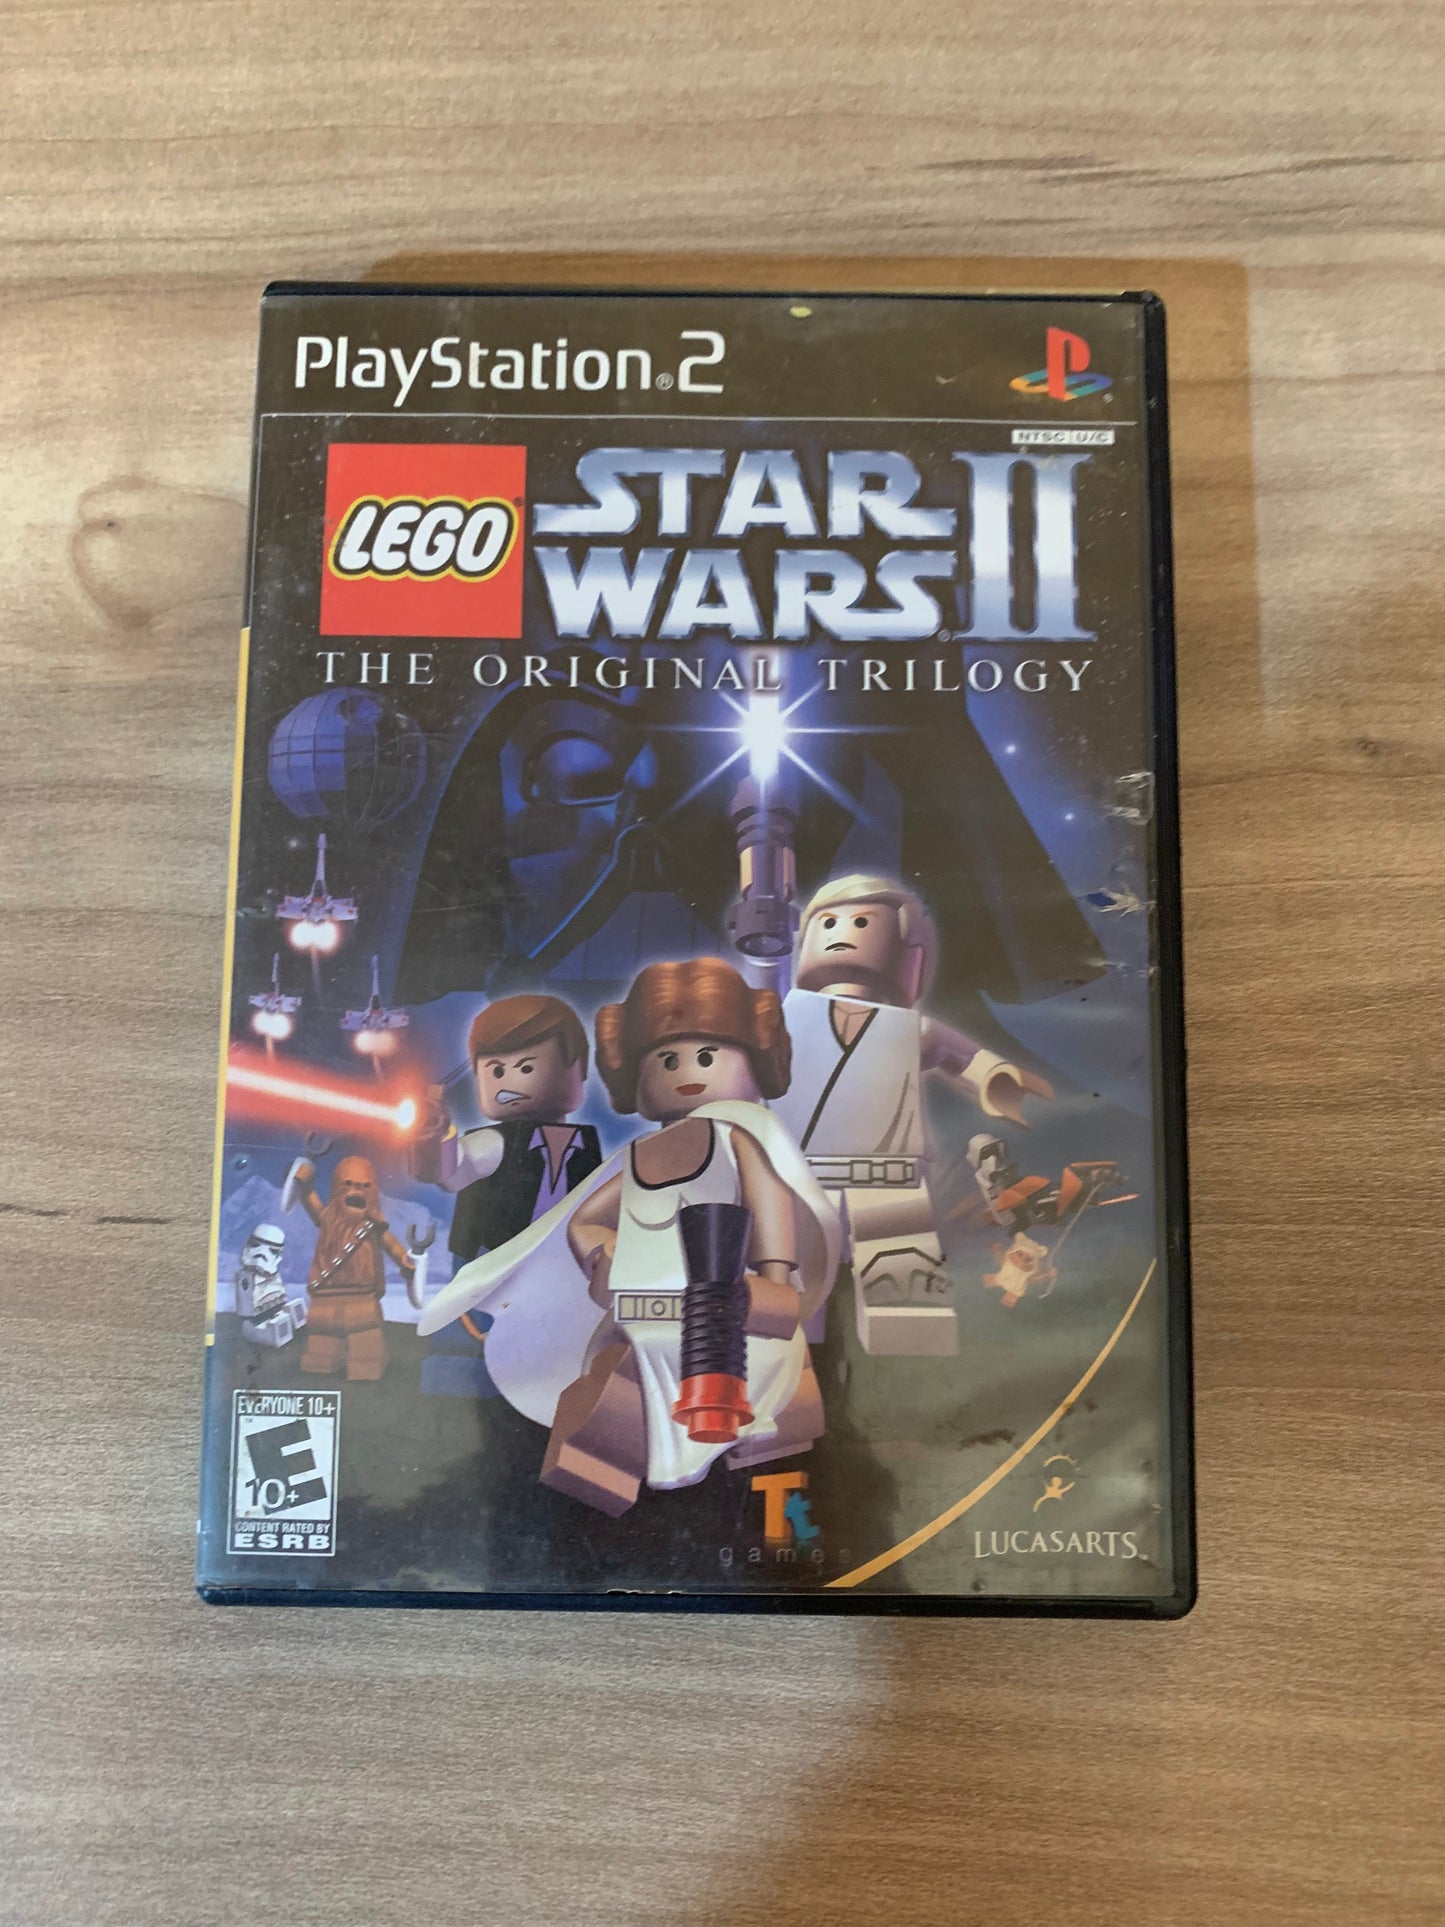 SONY PLAYSTATiON 2 [PS2] | LEGO STAR WARS II THE ORiGiNAL TRiLOGY